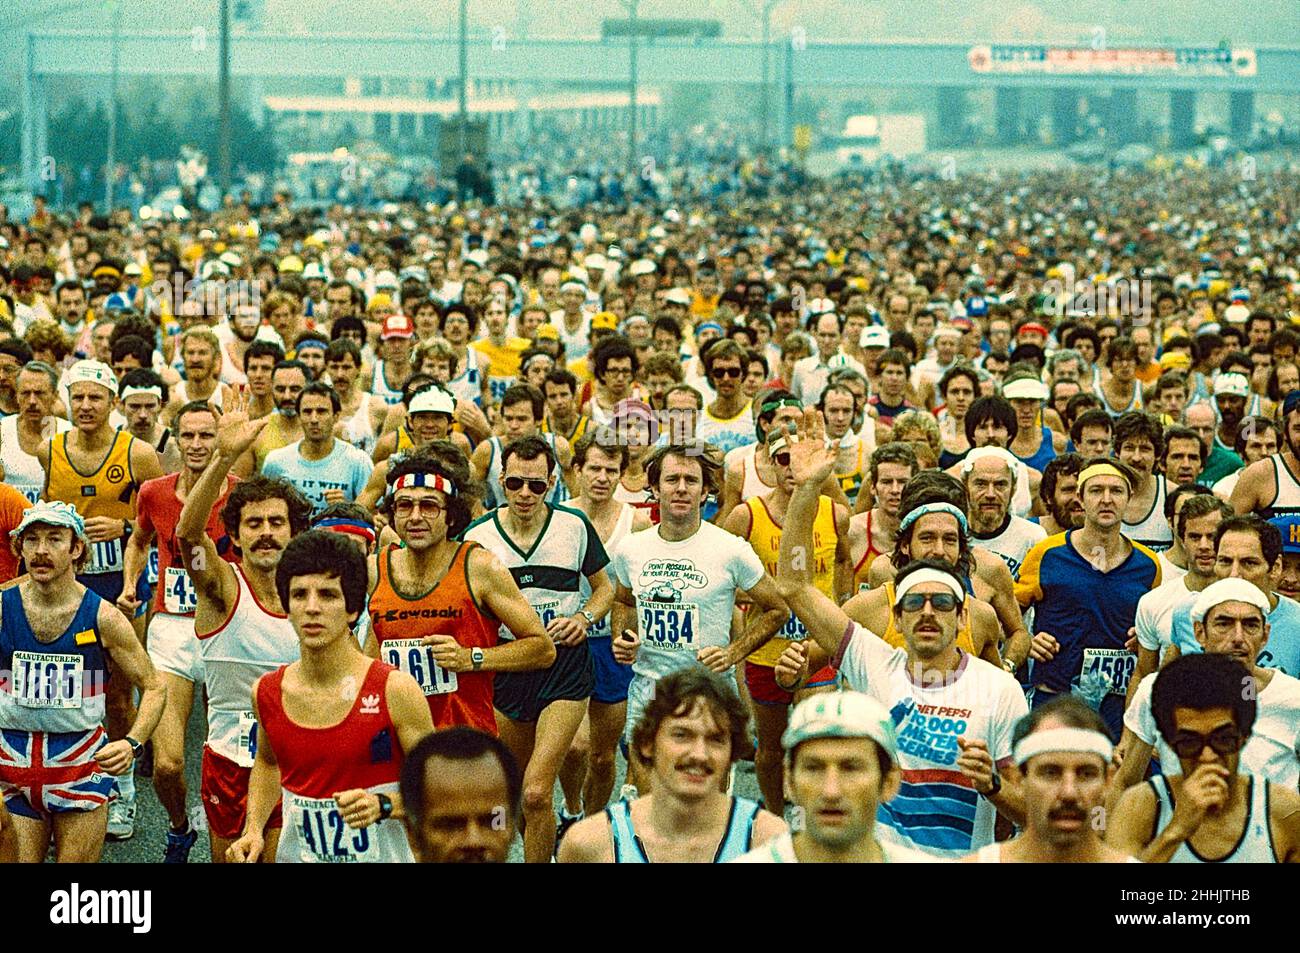 Start of the 1979 NYC Marathon. Stock Photo